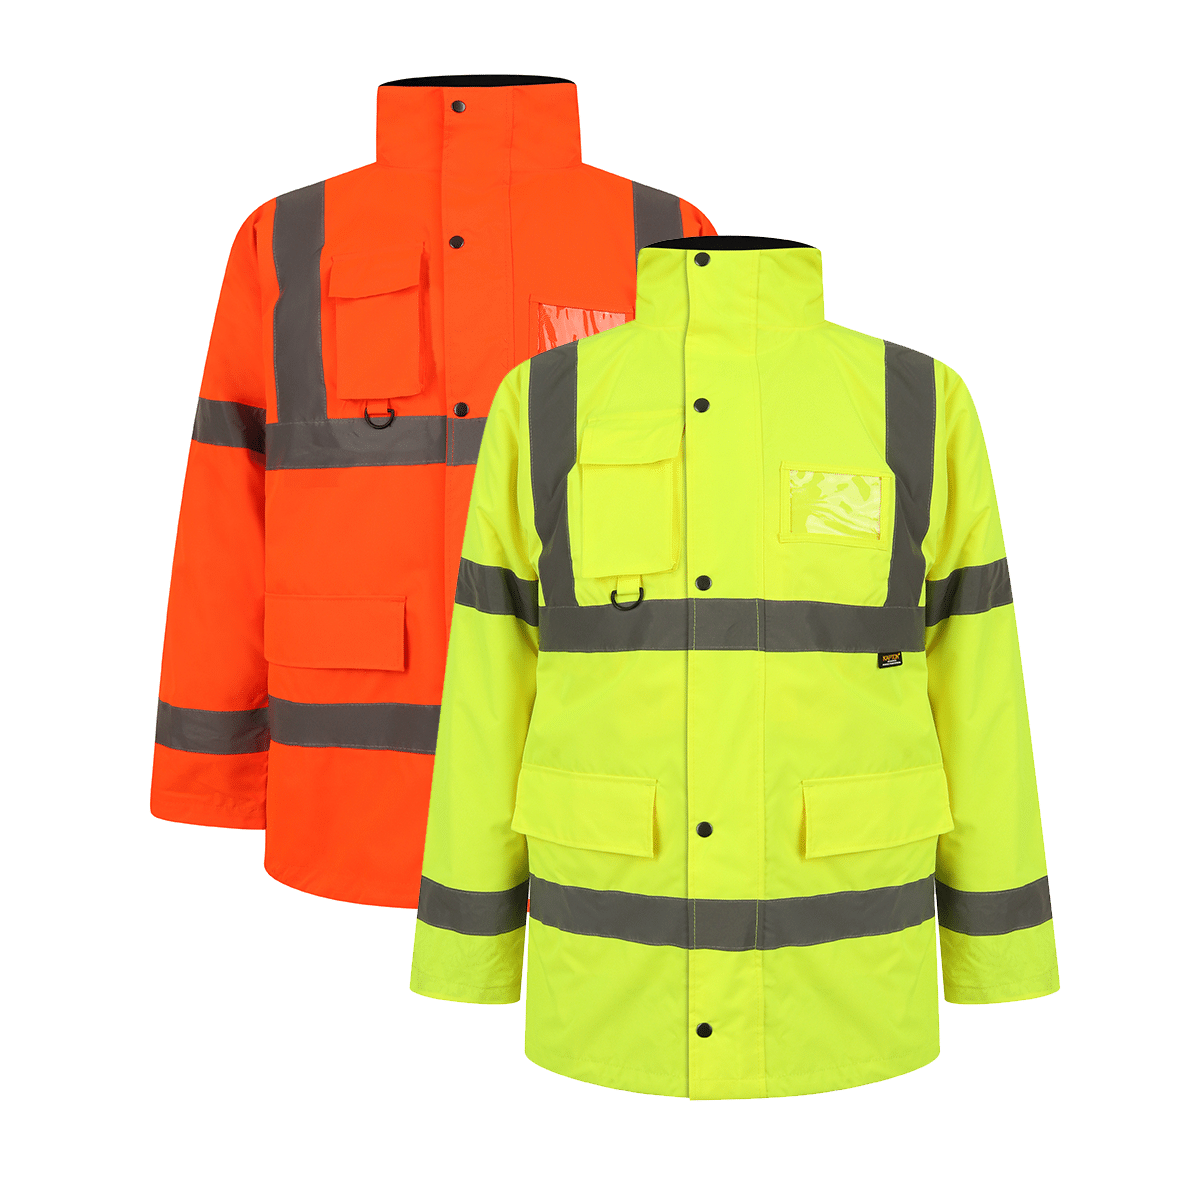 Essential Workwear Kapton Hi-Vis Traffic Jacket